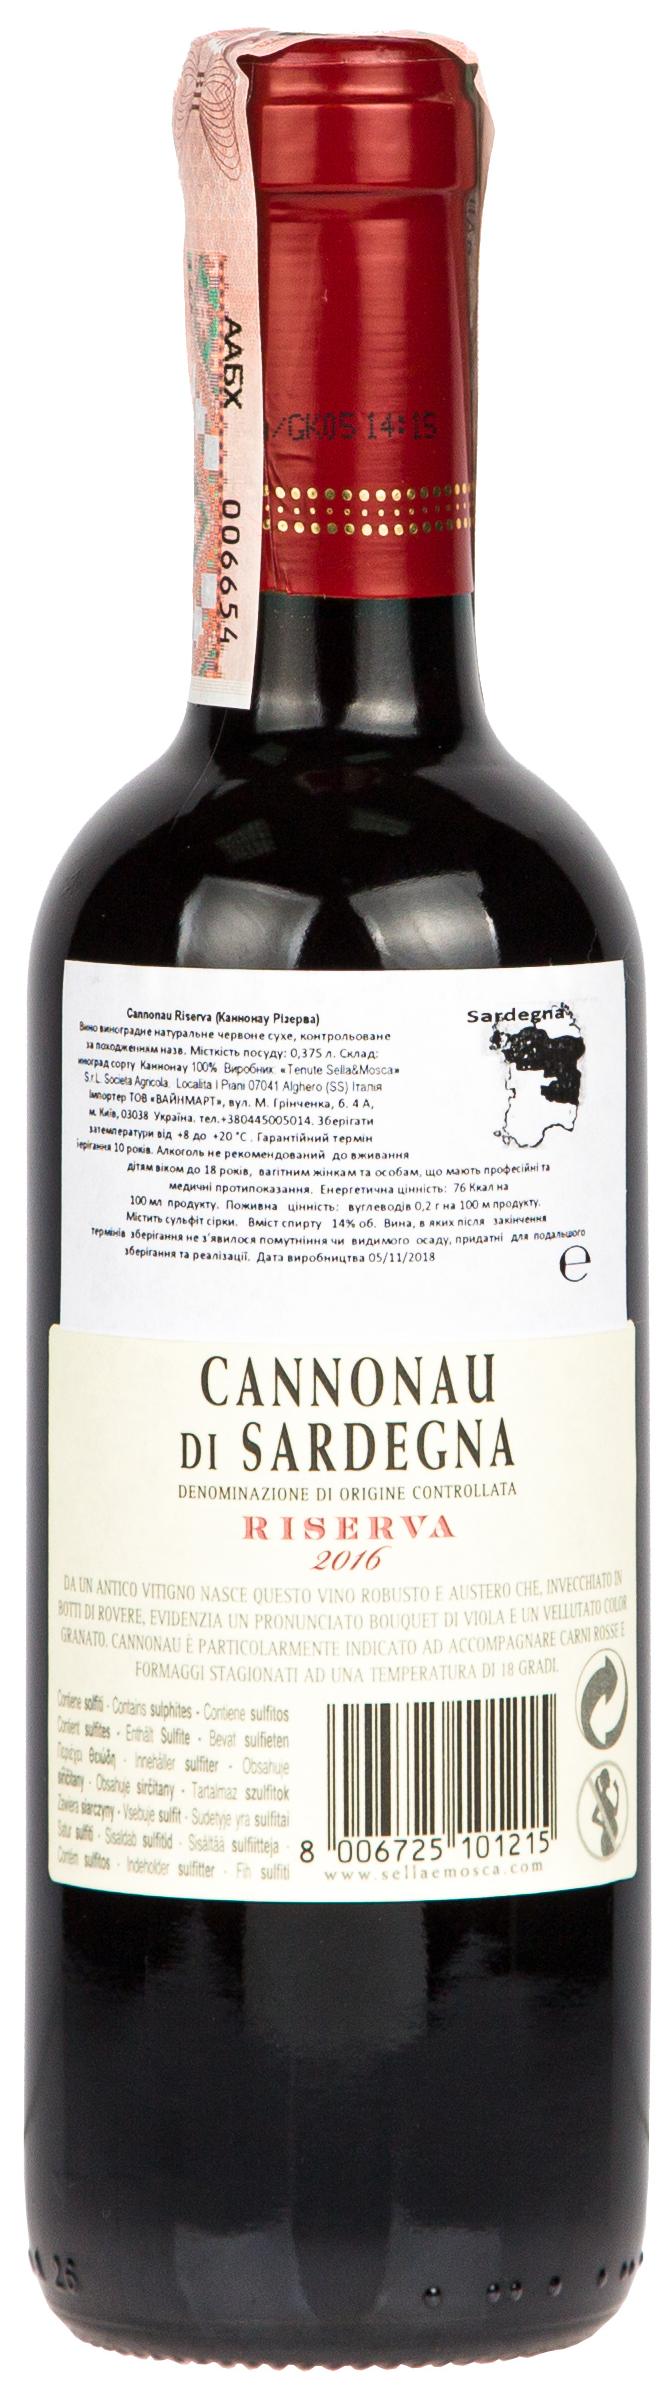 Sella&Mosca Cannonau Riserva 2016, 375ml Set 6 bottles - 2